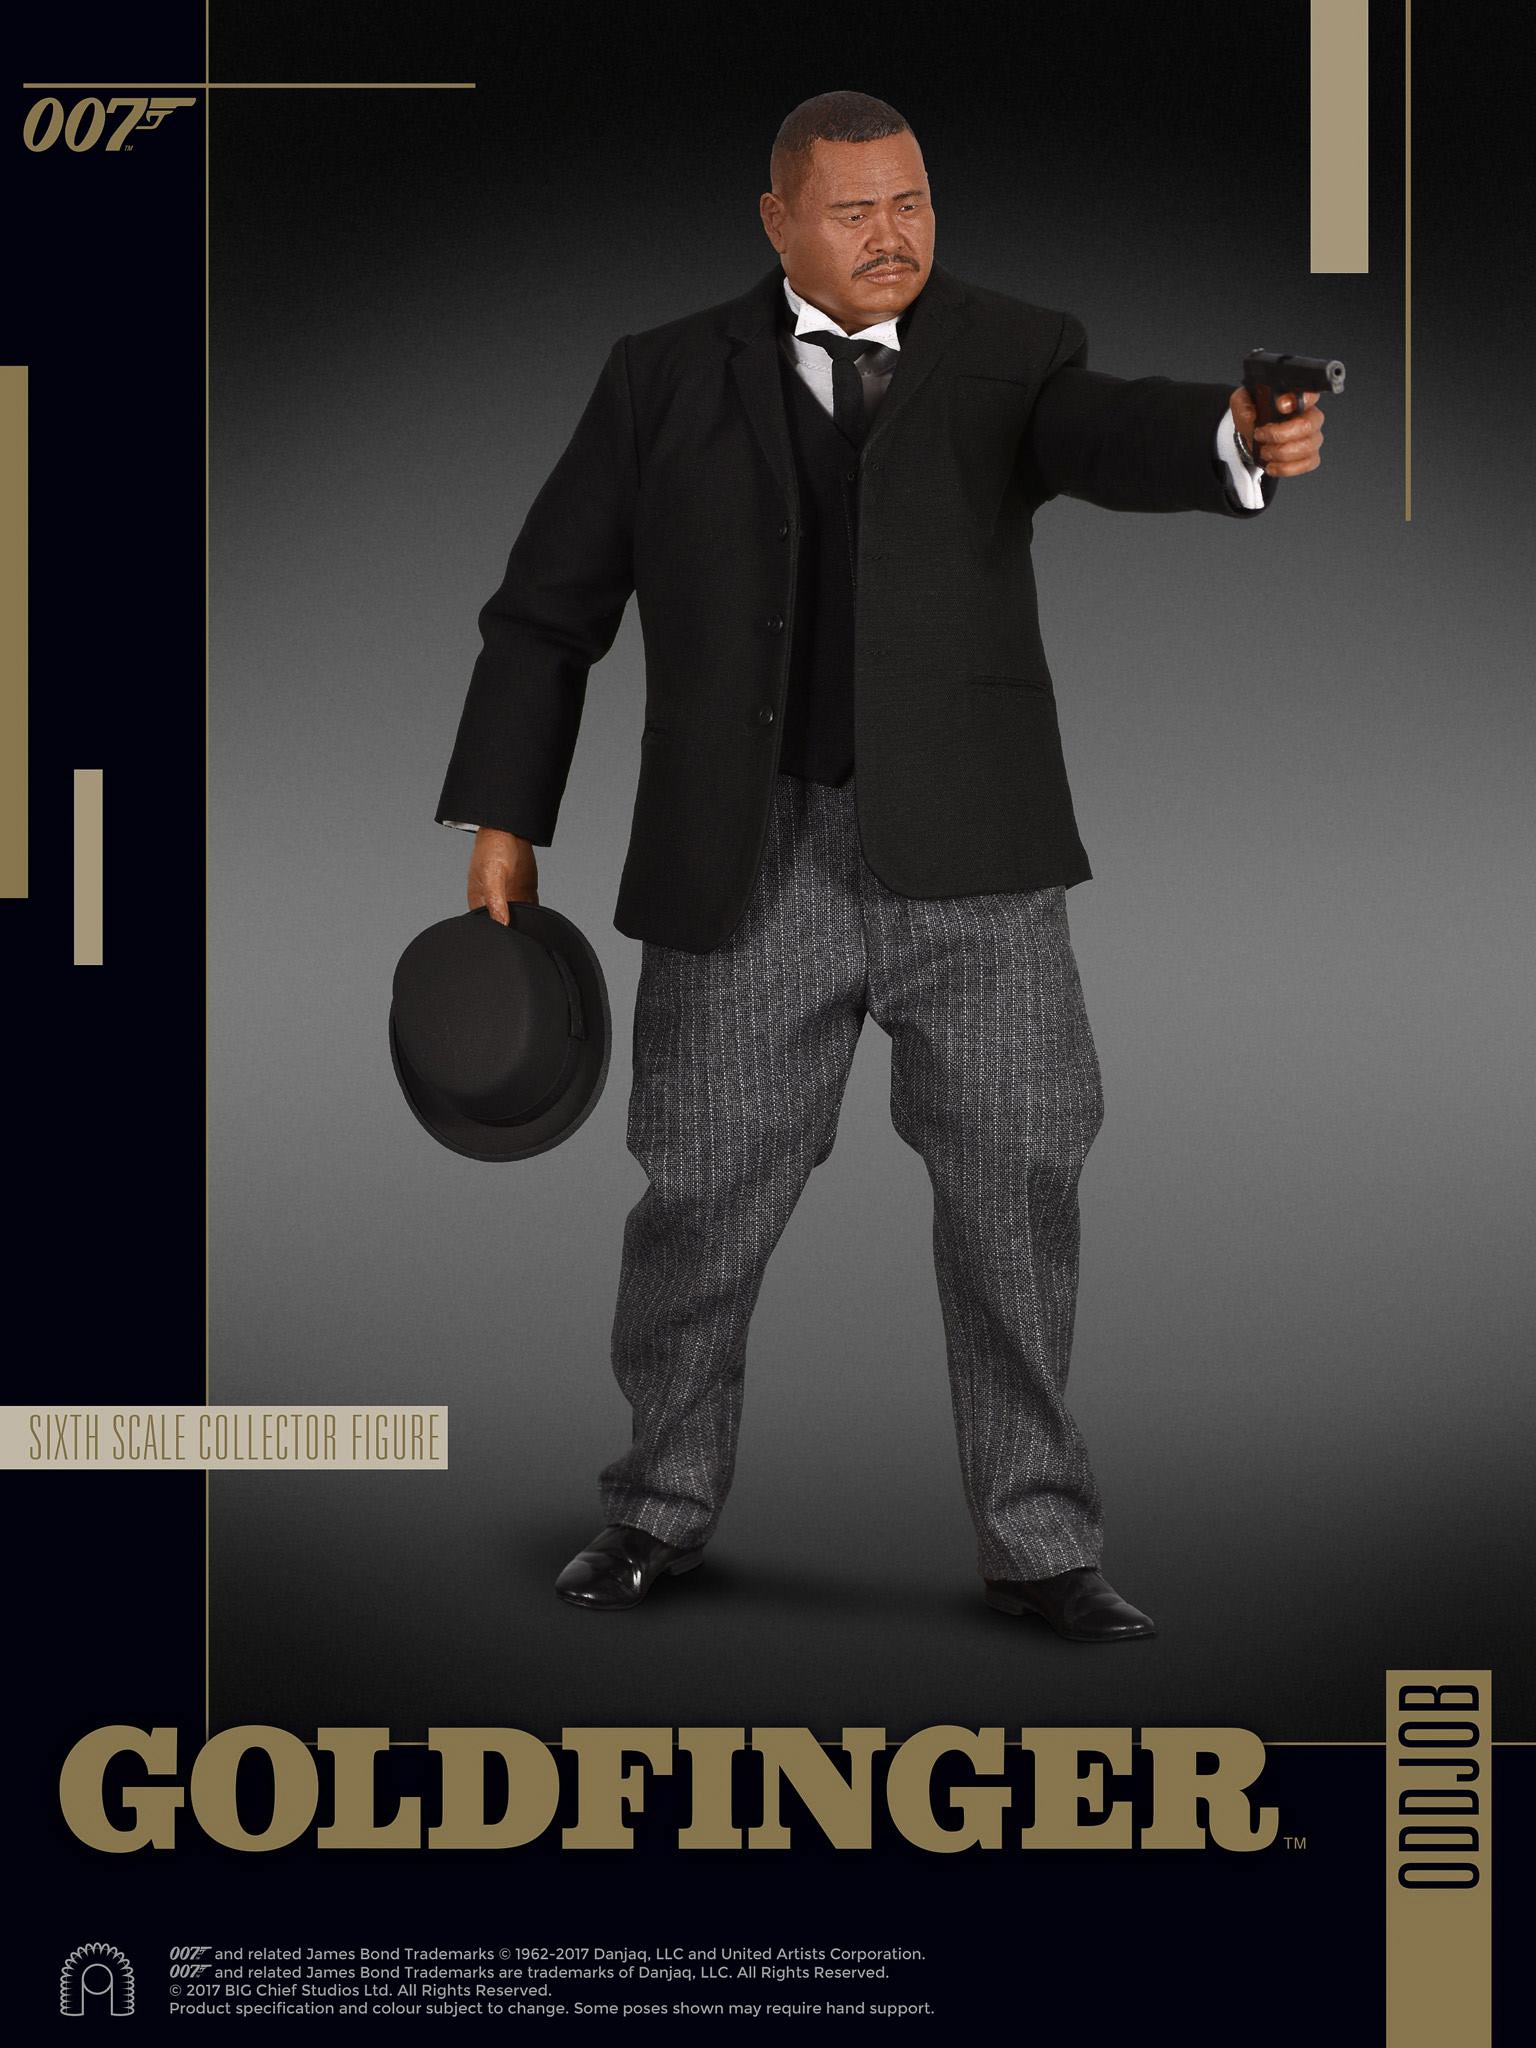 Big-Chief-James-Bond-Goldfinger-Oddjob-Full-Reveal-031.jpg